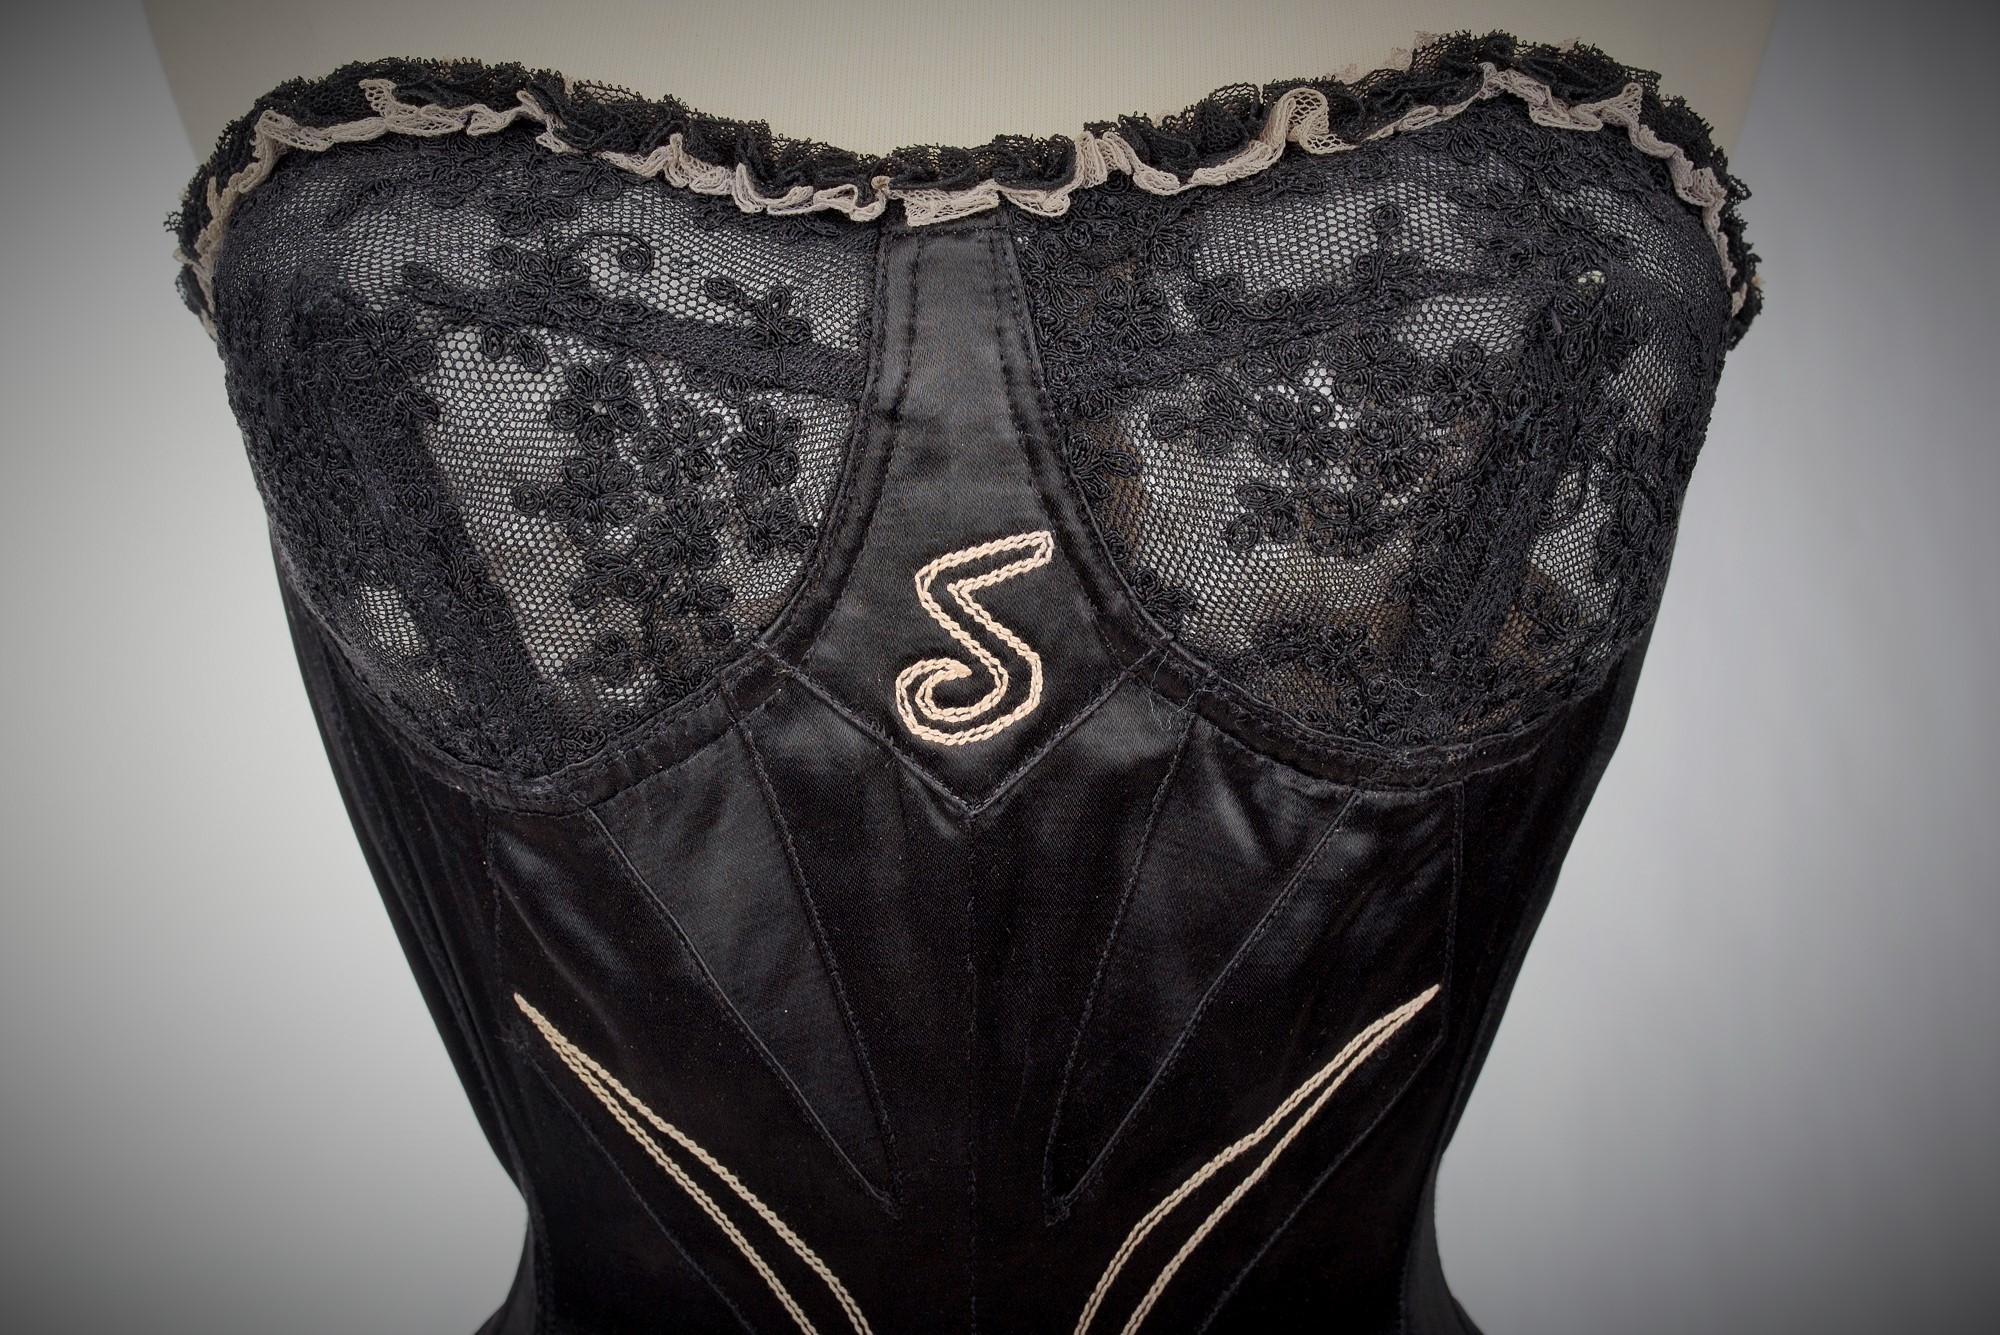 Women's Embroidered satin corset for an elegant Parisian woman - France Circa 1930 -1950